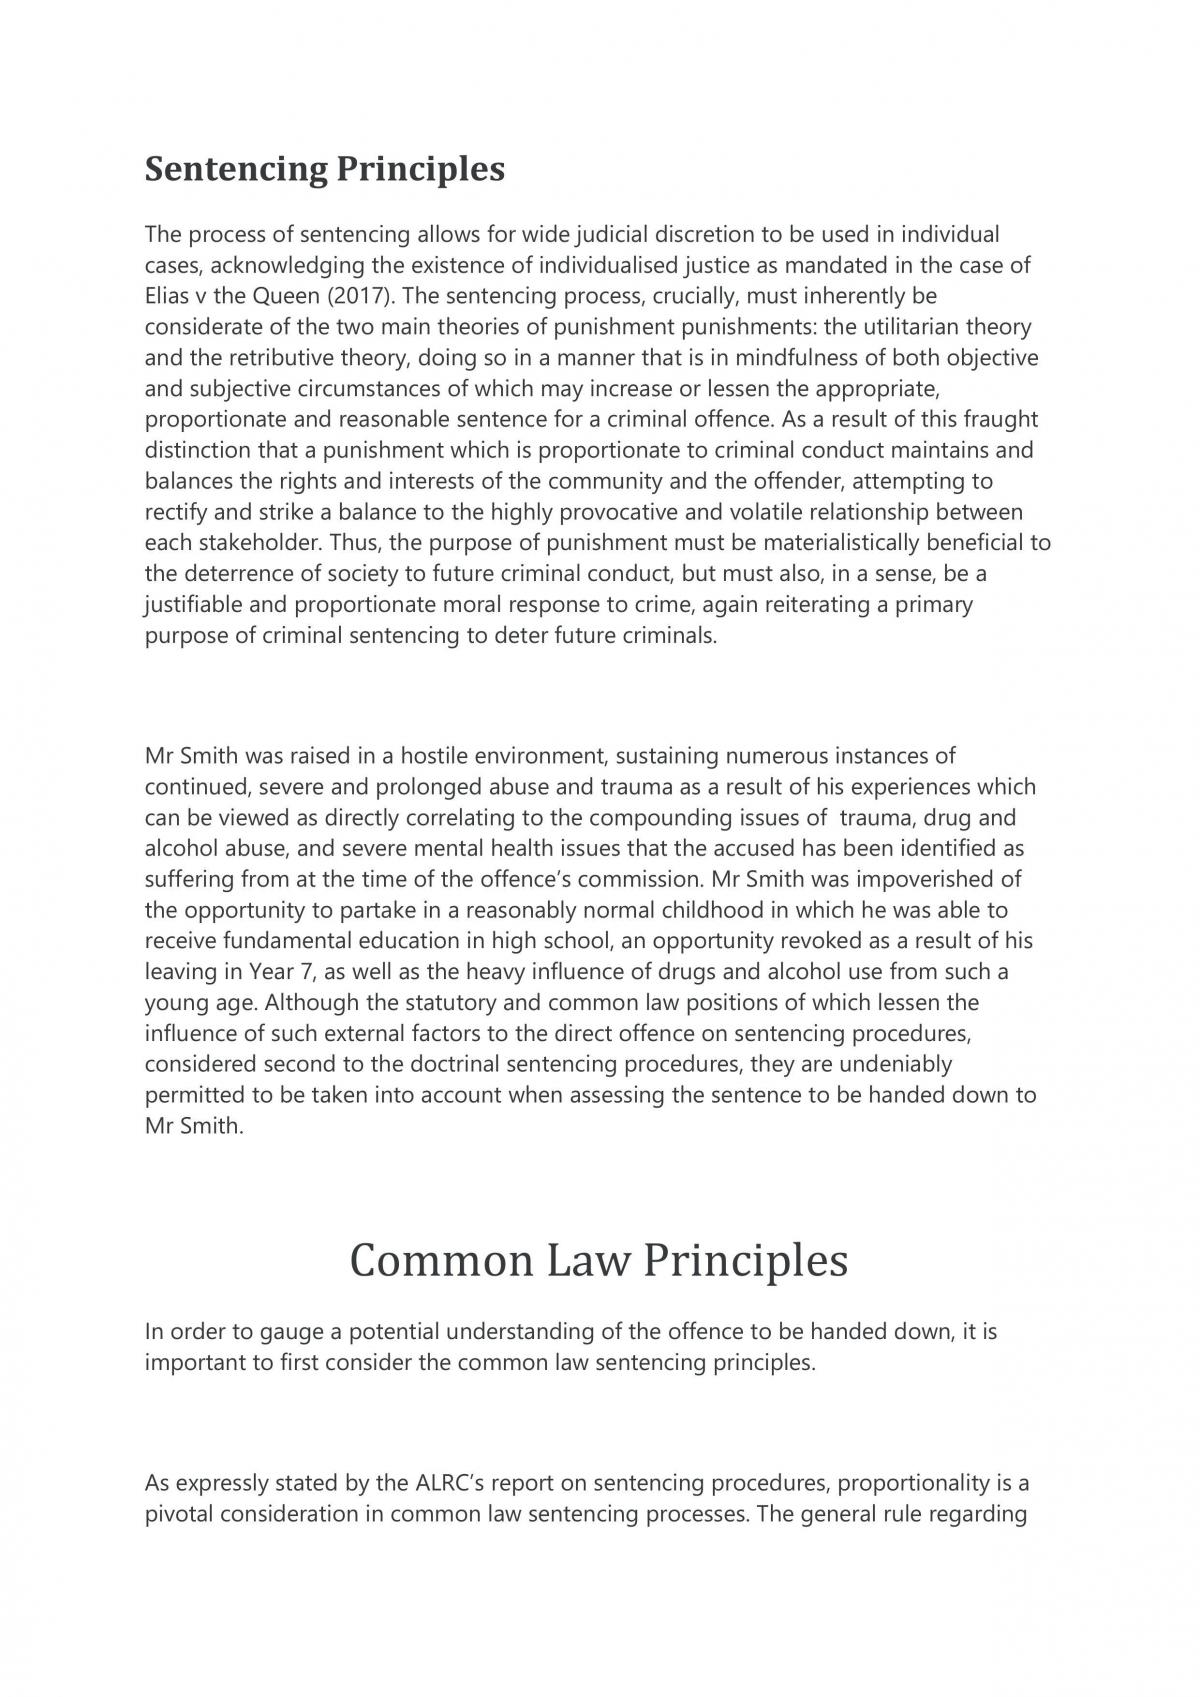 sentencing-principles-llb1180-criminal-law-and-process-b-uow